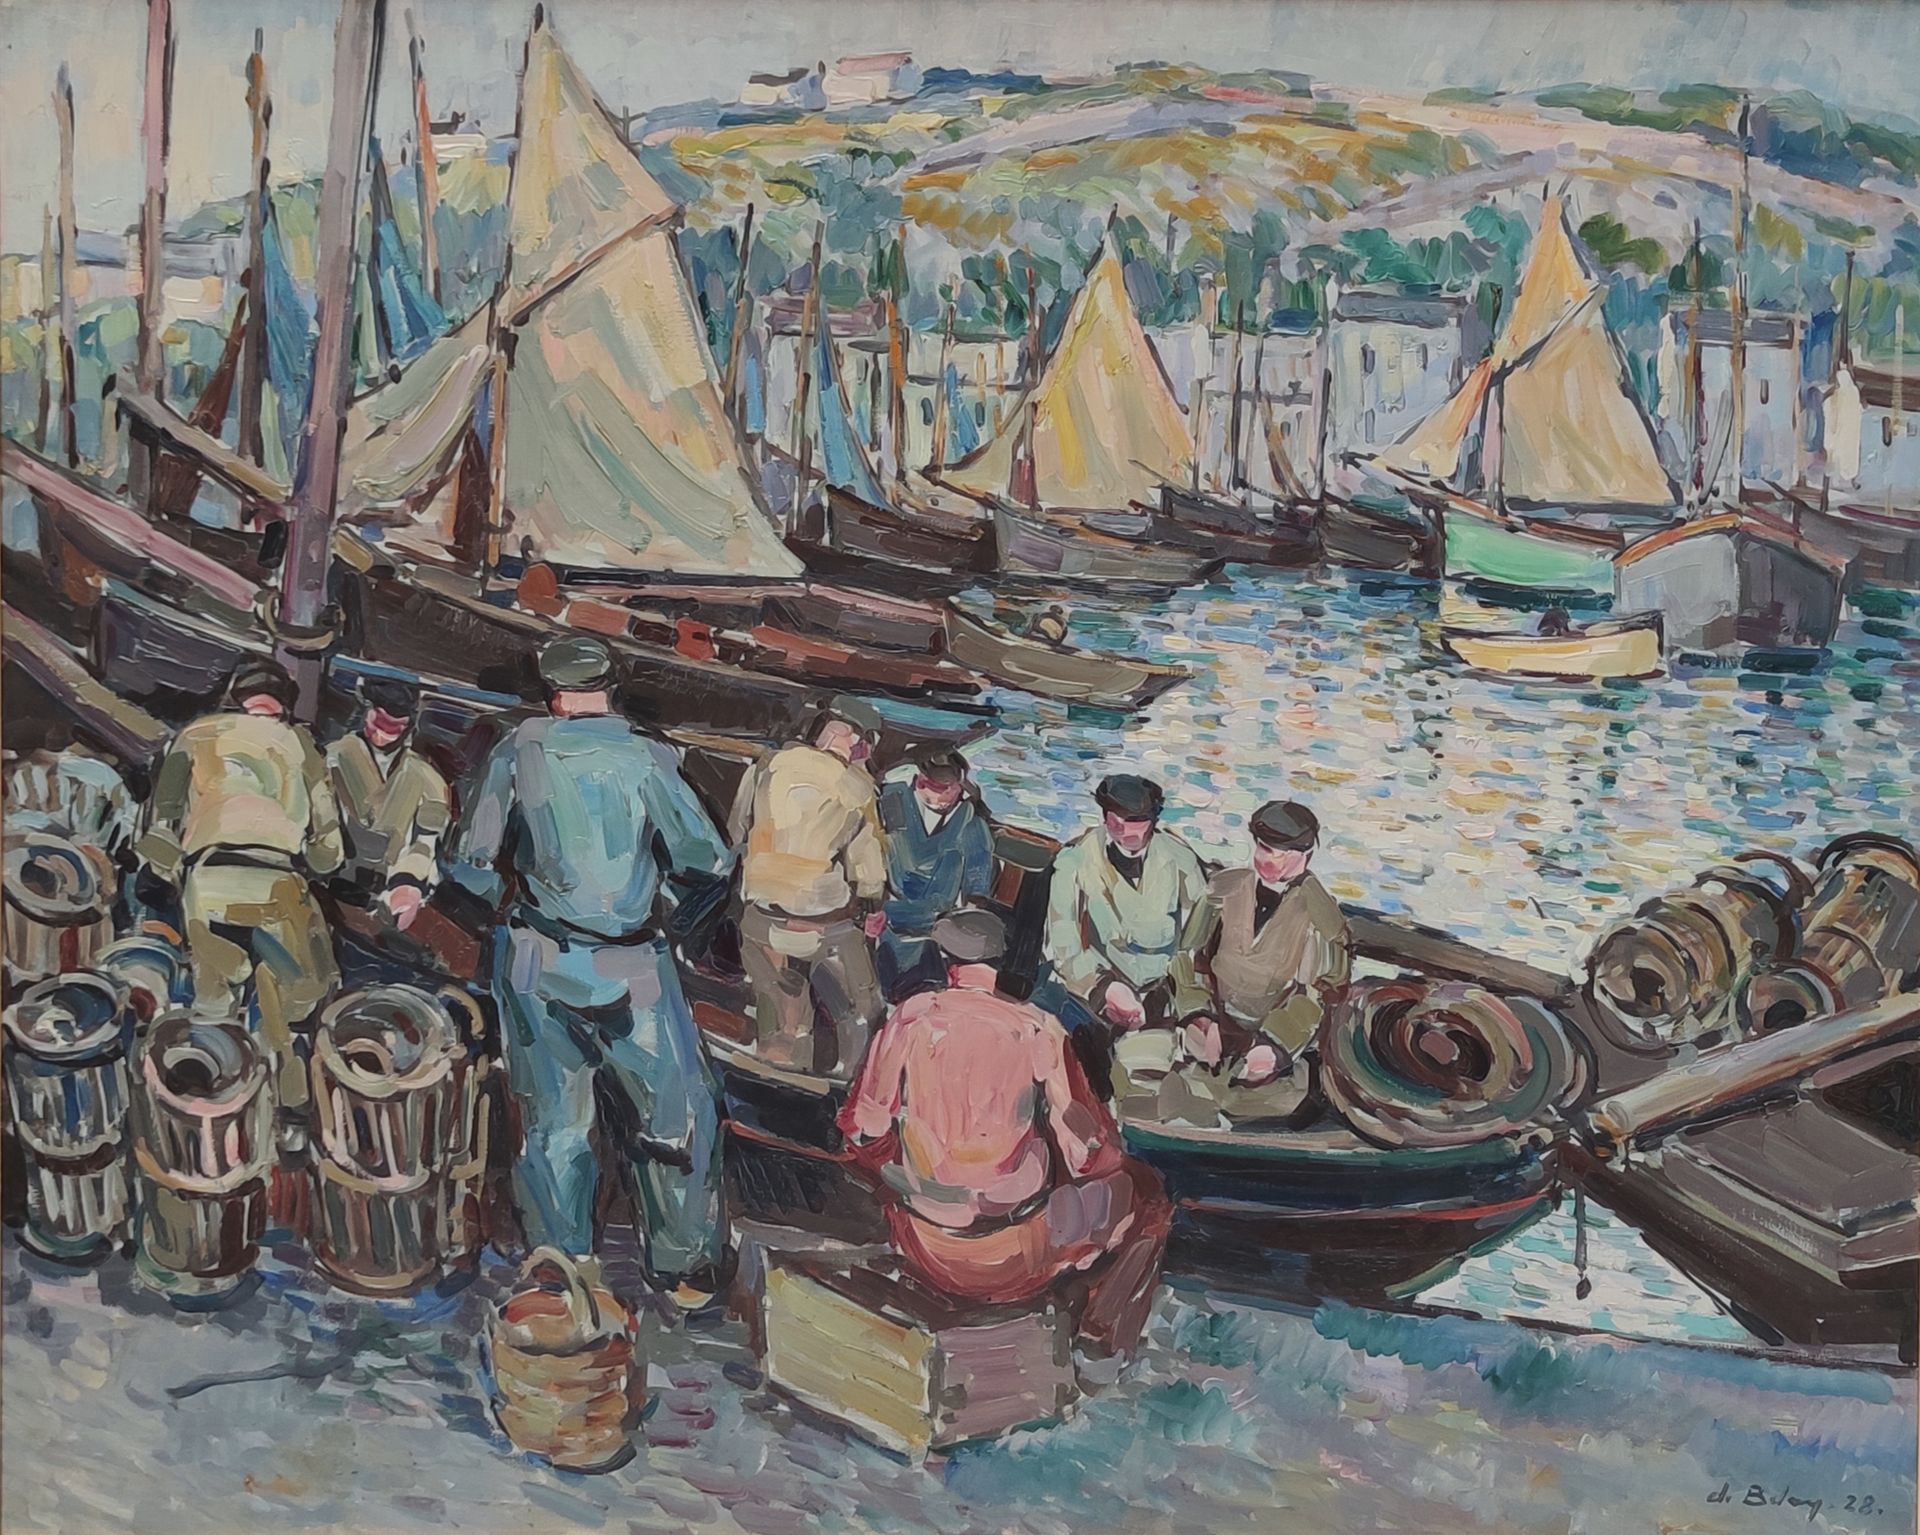 Null 皮埃尔-德-贝莱 (1890-1947)

布列塔尼港口的渔民和帆船，1928年

布面油画，右下方有签名和日期

81.5 x 100.5厘米

(&hellip;